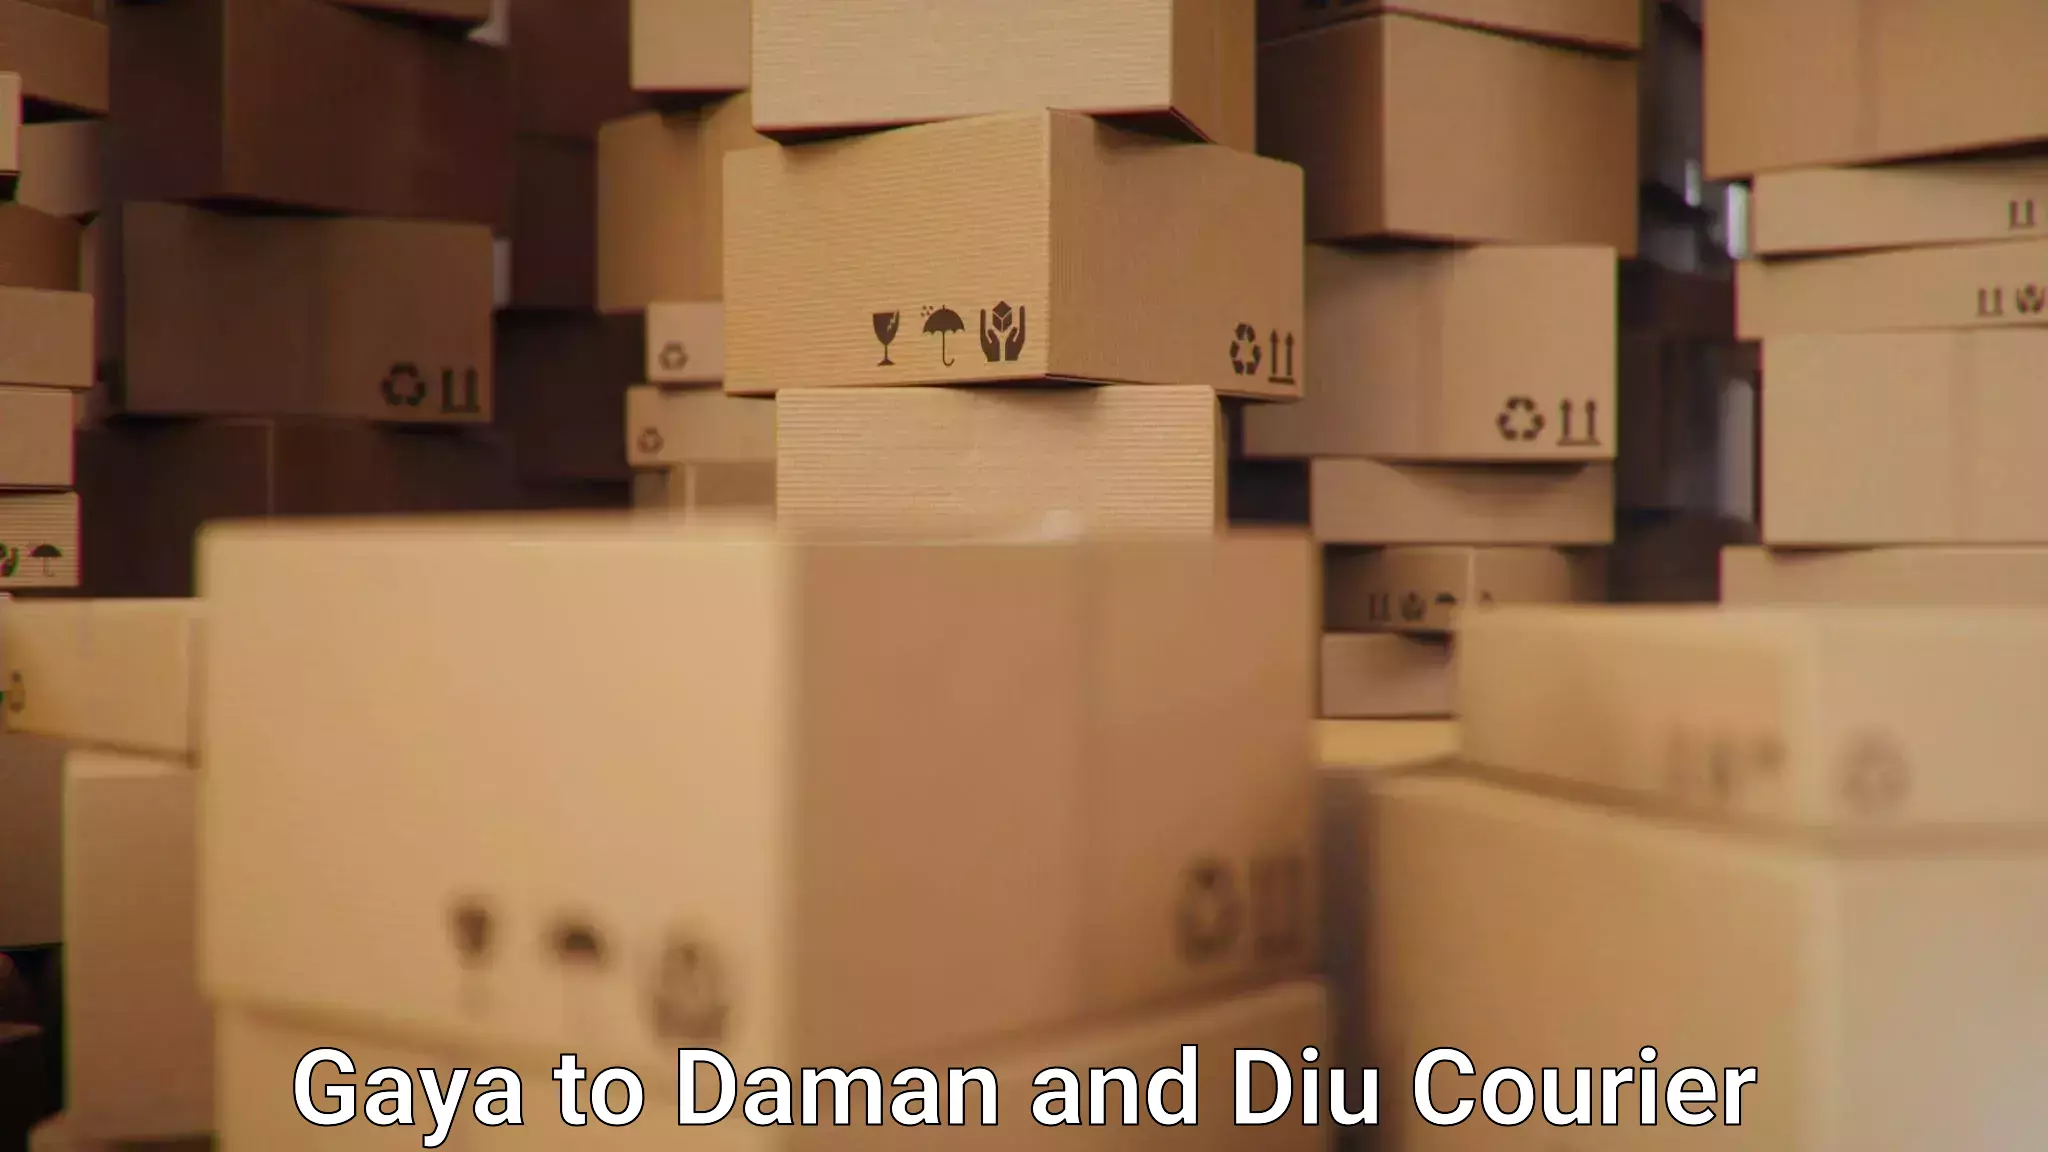 Efficient order fulfillment Gaya to Daman and Diu